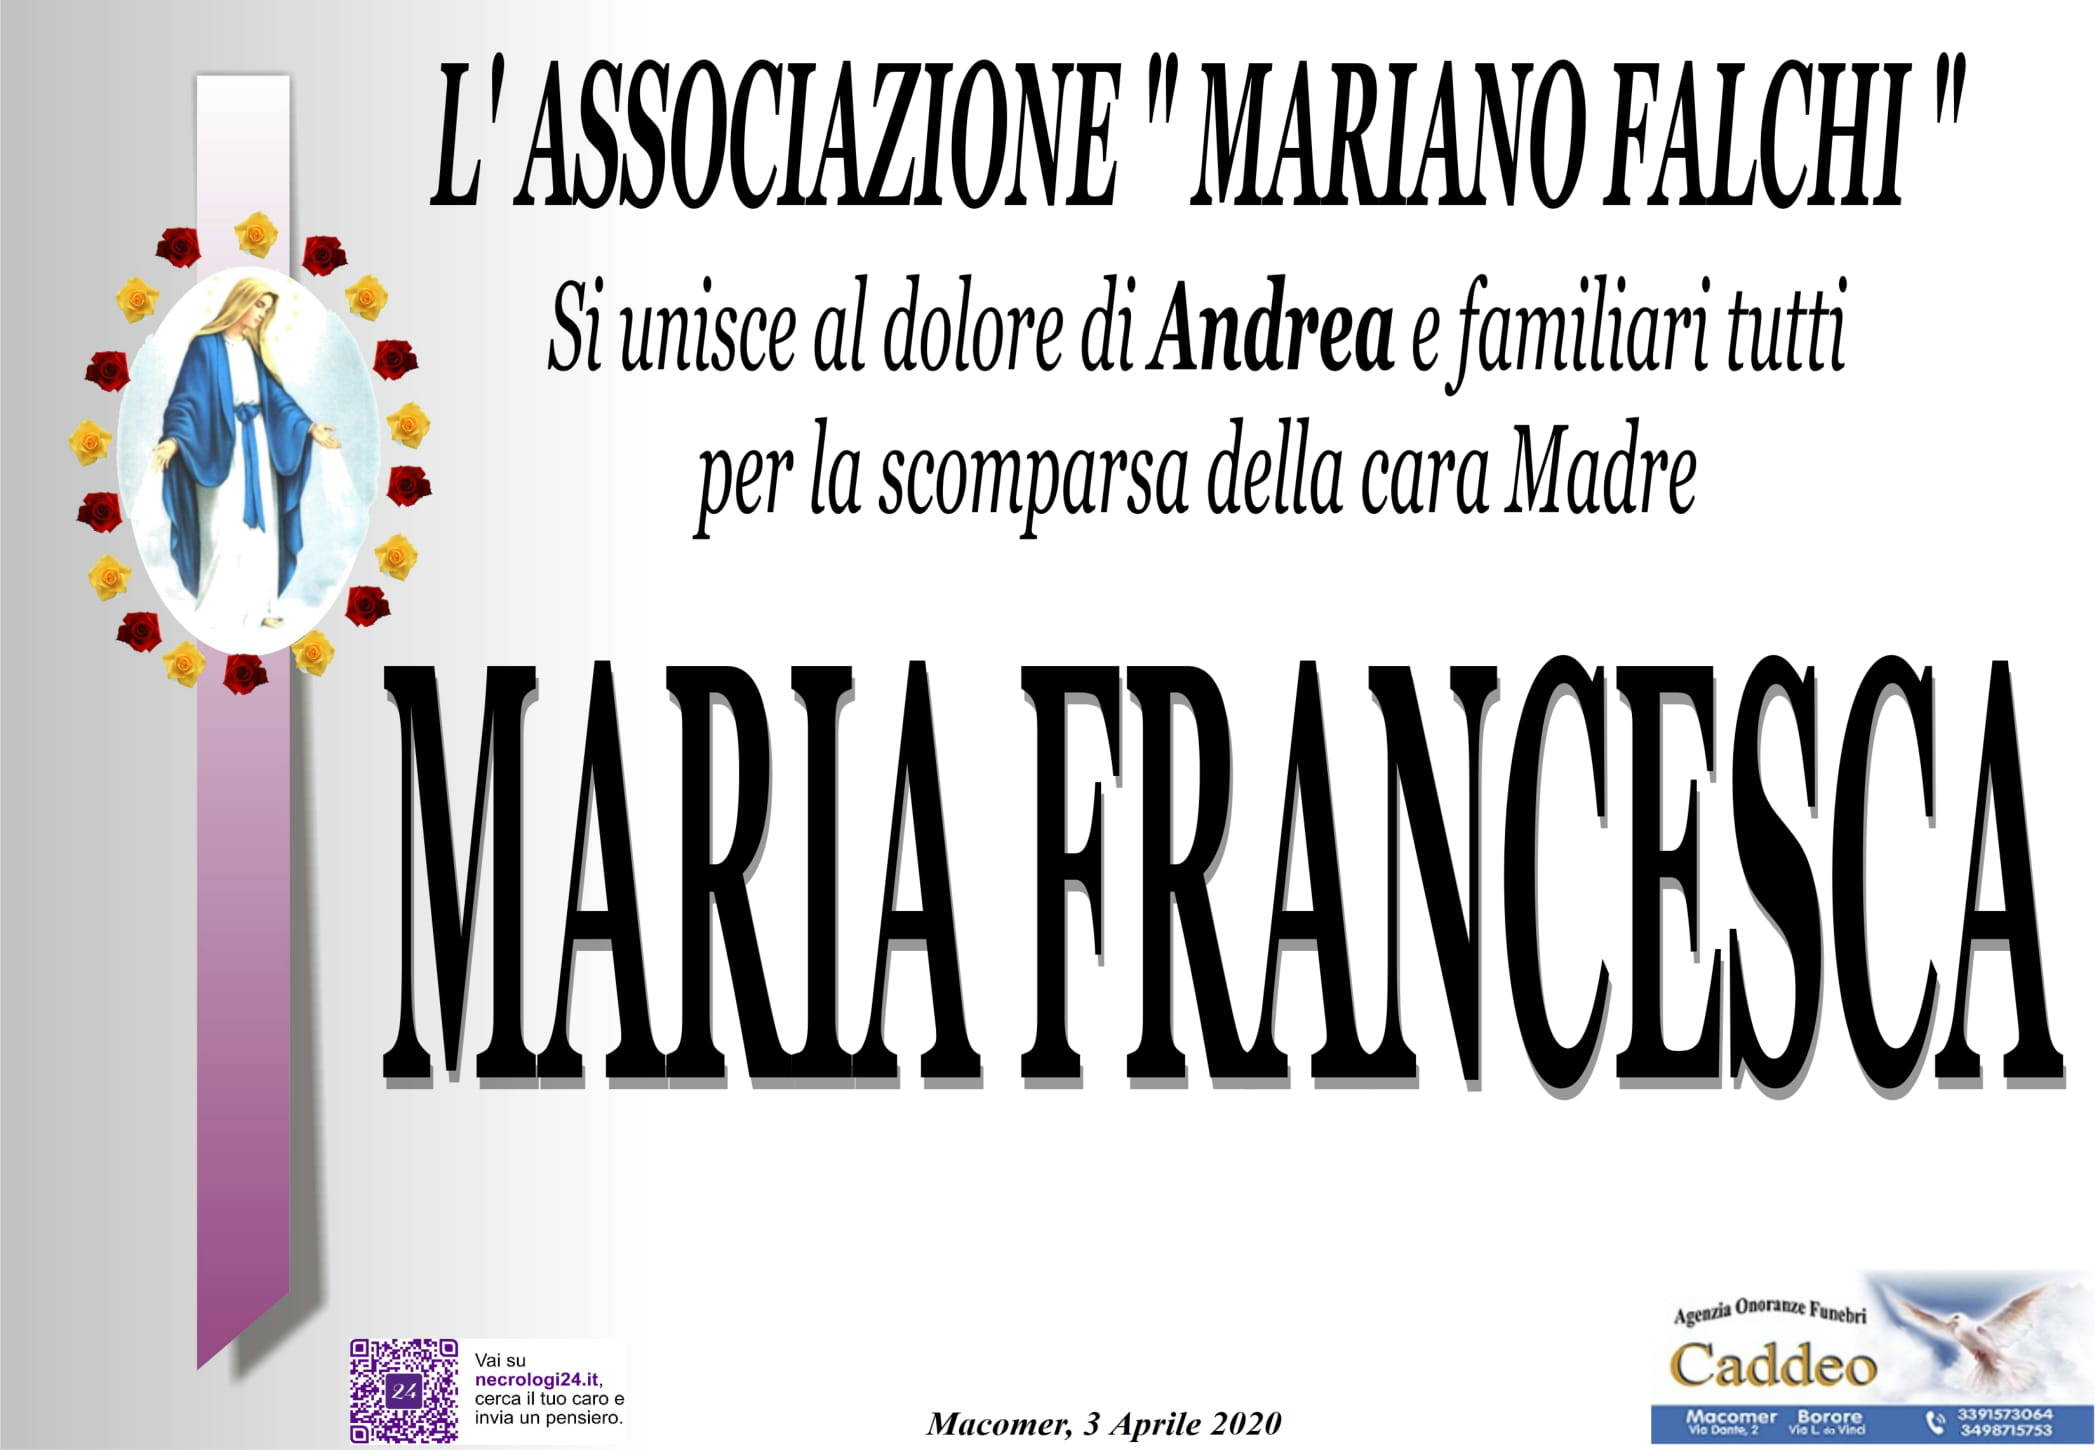 Associazione "Mariano Falchi"